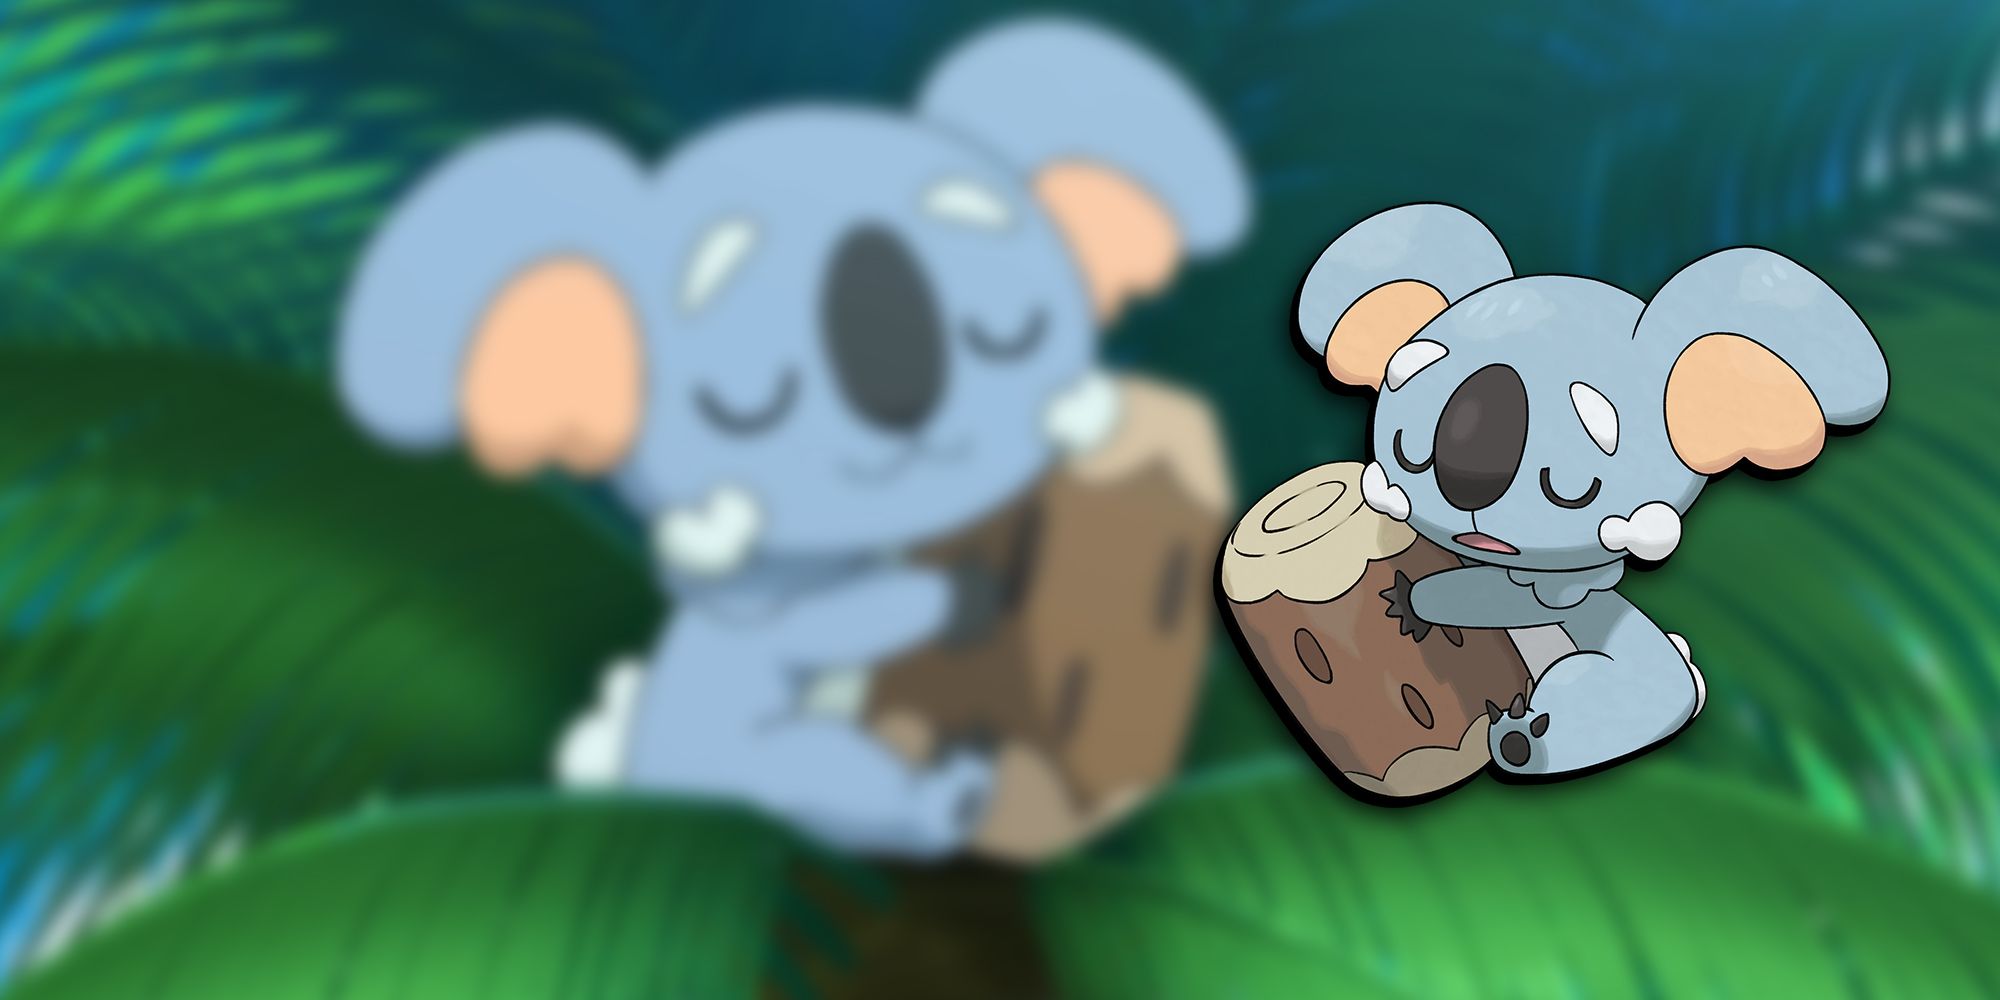 Pokemon - Komala PNG Overlaid On Image Of Komala Sleeping In A Tree In The Pokemon Anime